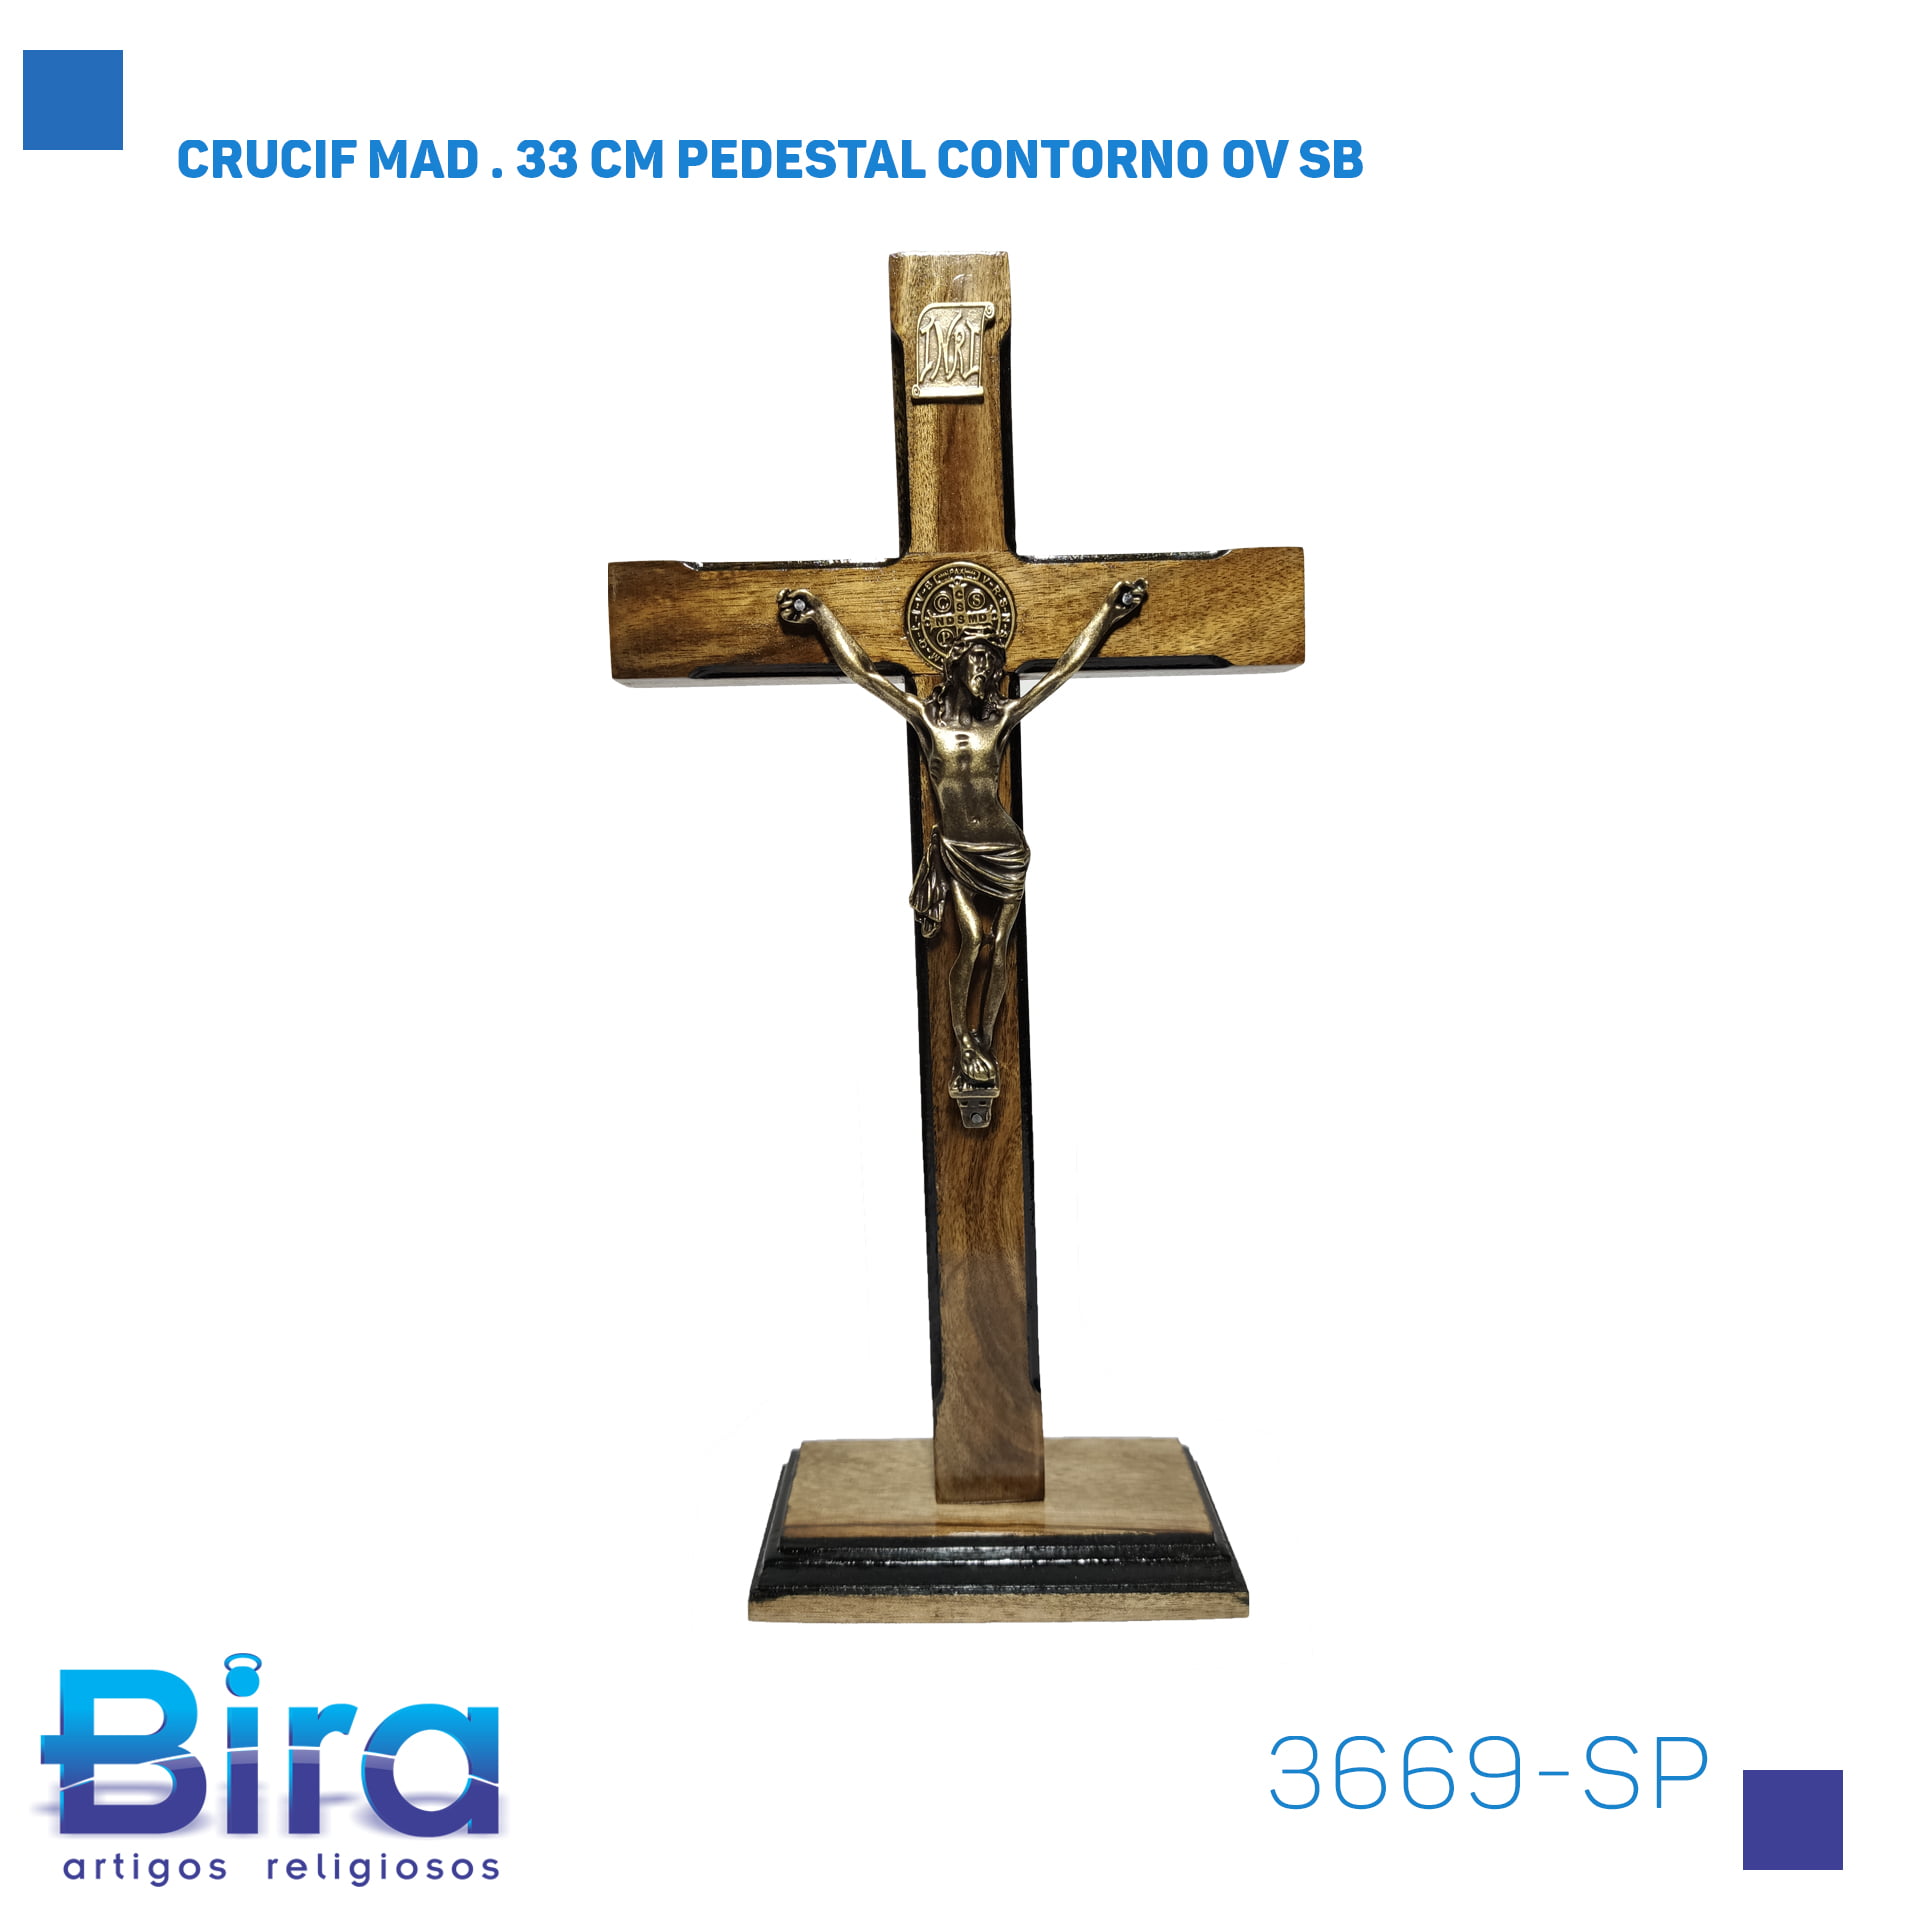 Bira Artigos Religiosos - CRUCIF MAD . 33 CM PEDESTAL CONTORNO OV SB Cód. 3669-SP